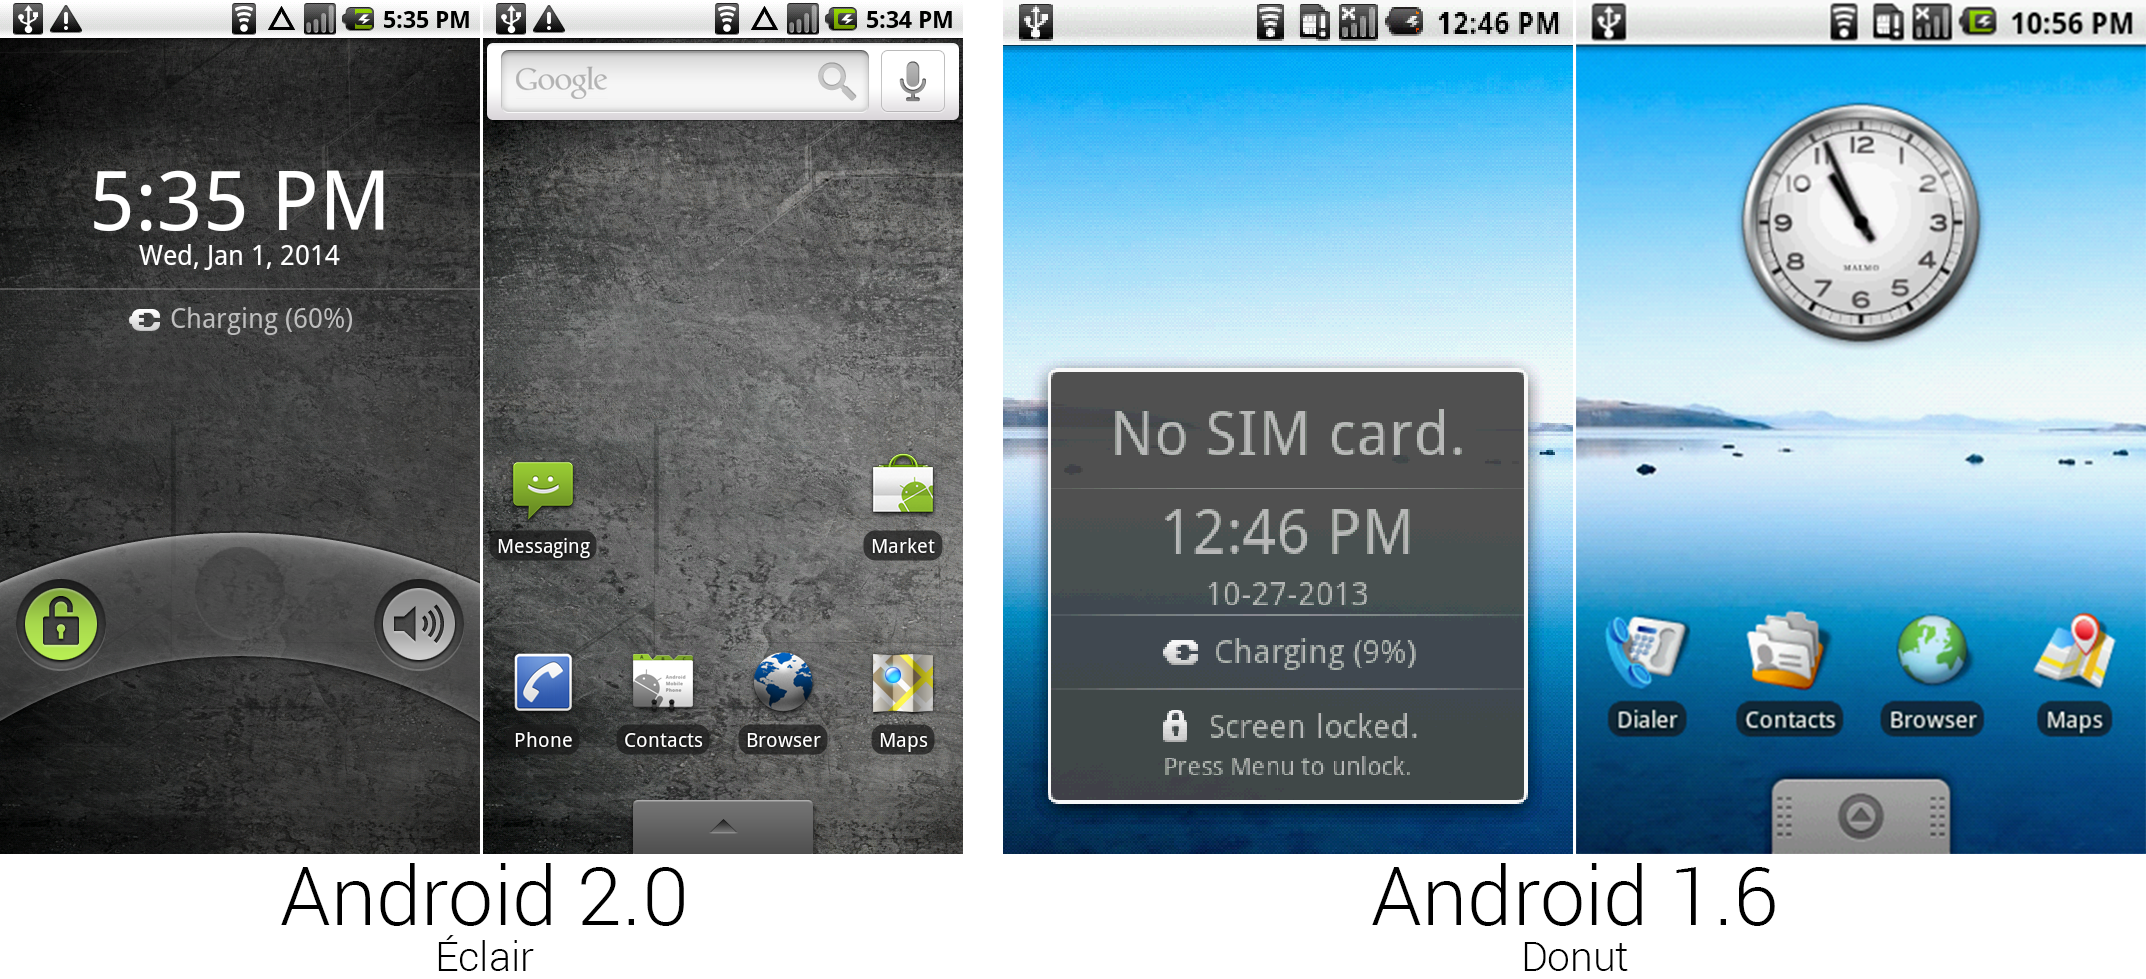 002 андроид. Интерфейс андроид 2. Android 2.0. Интерфейс андроид 1. Андроид 1.0 Интерфейс.